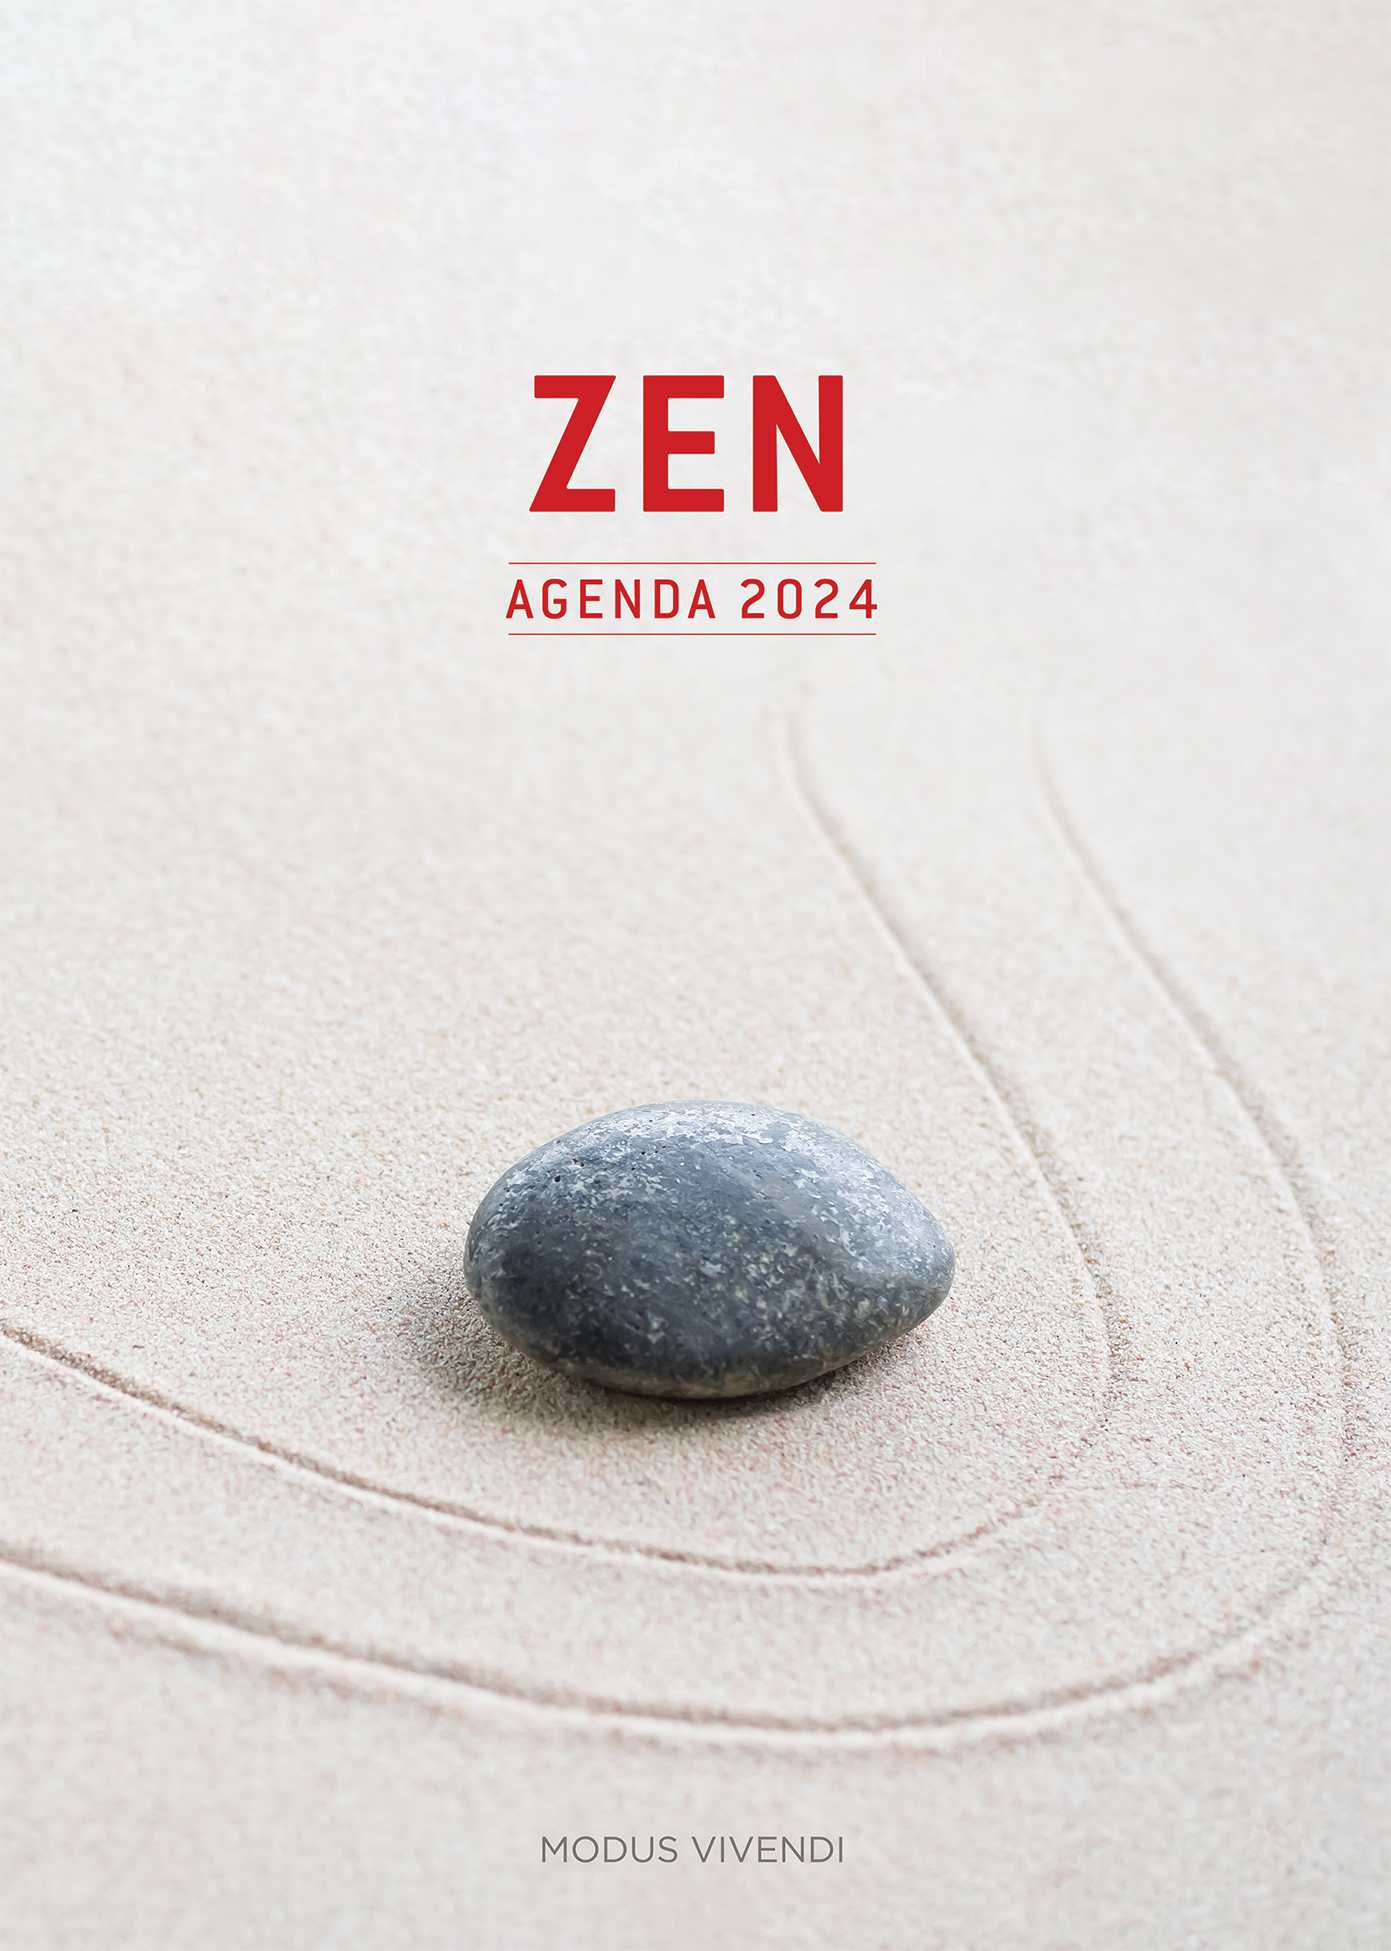 Zen - Agenda 2024 - Modus Vivendi